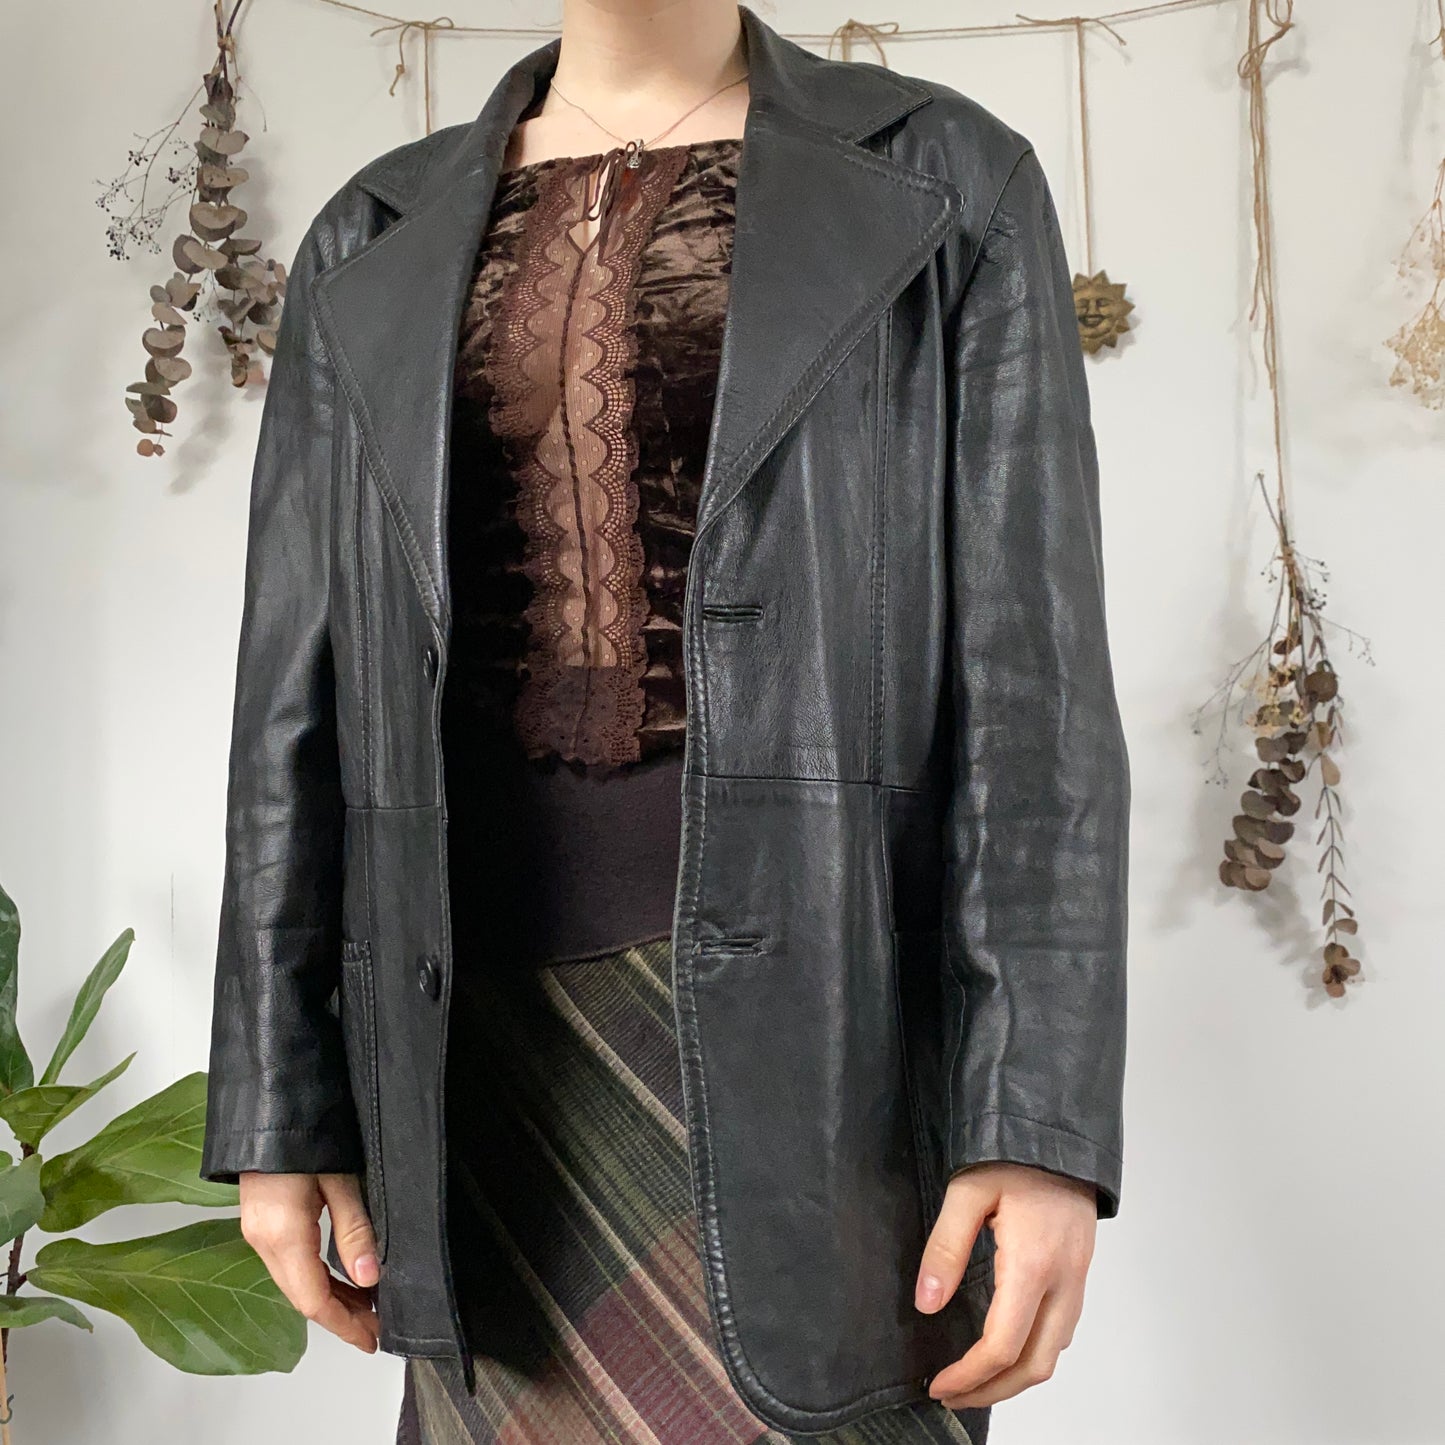 Black leather jacket - size M/L